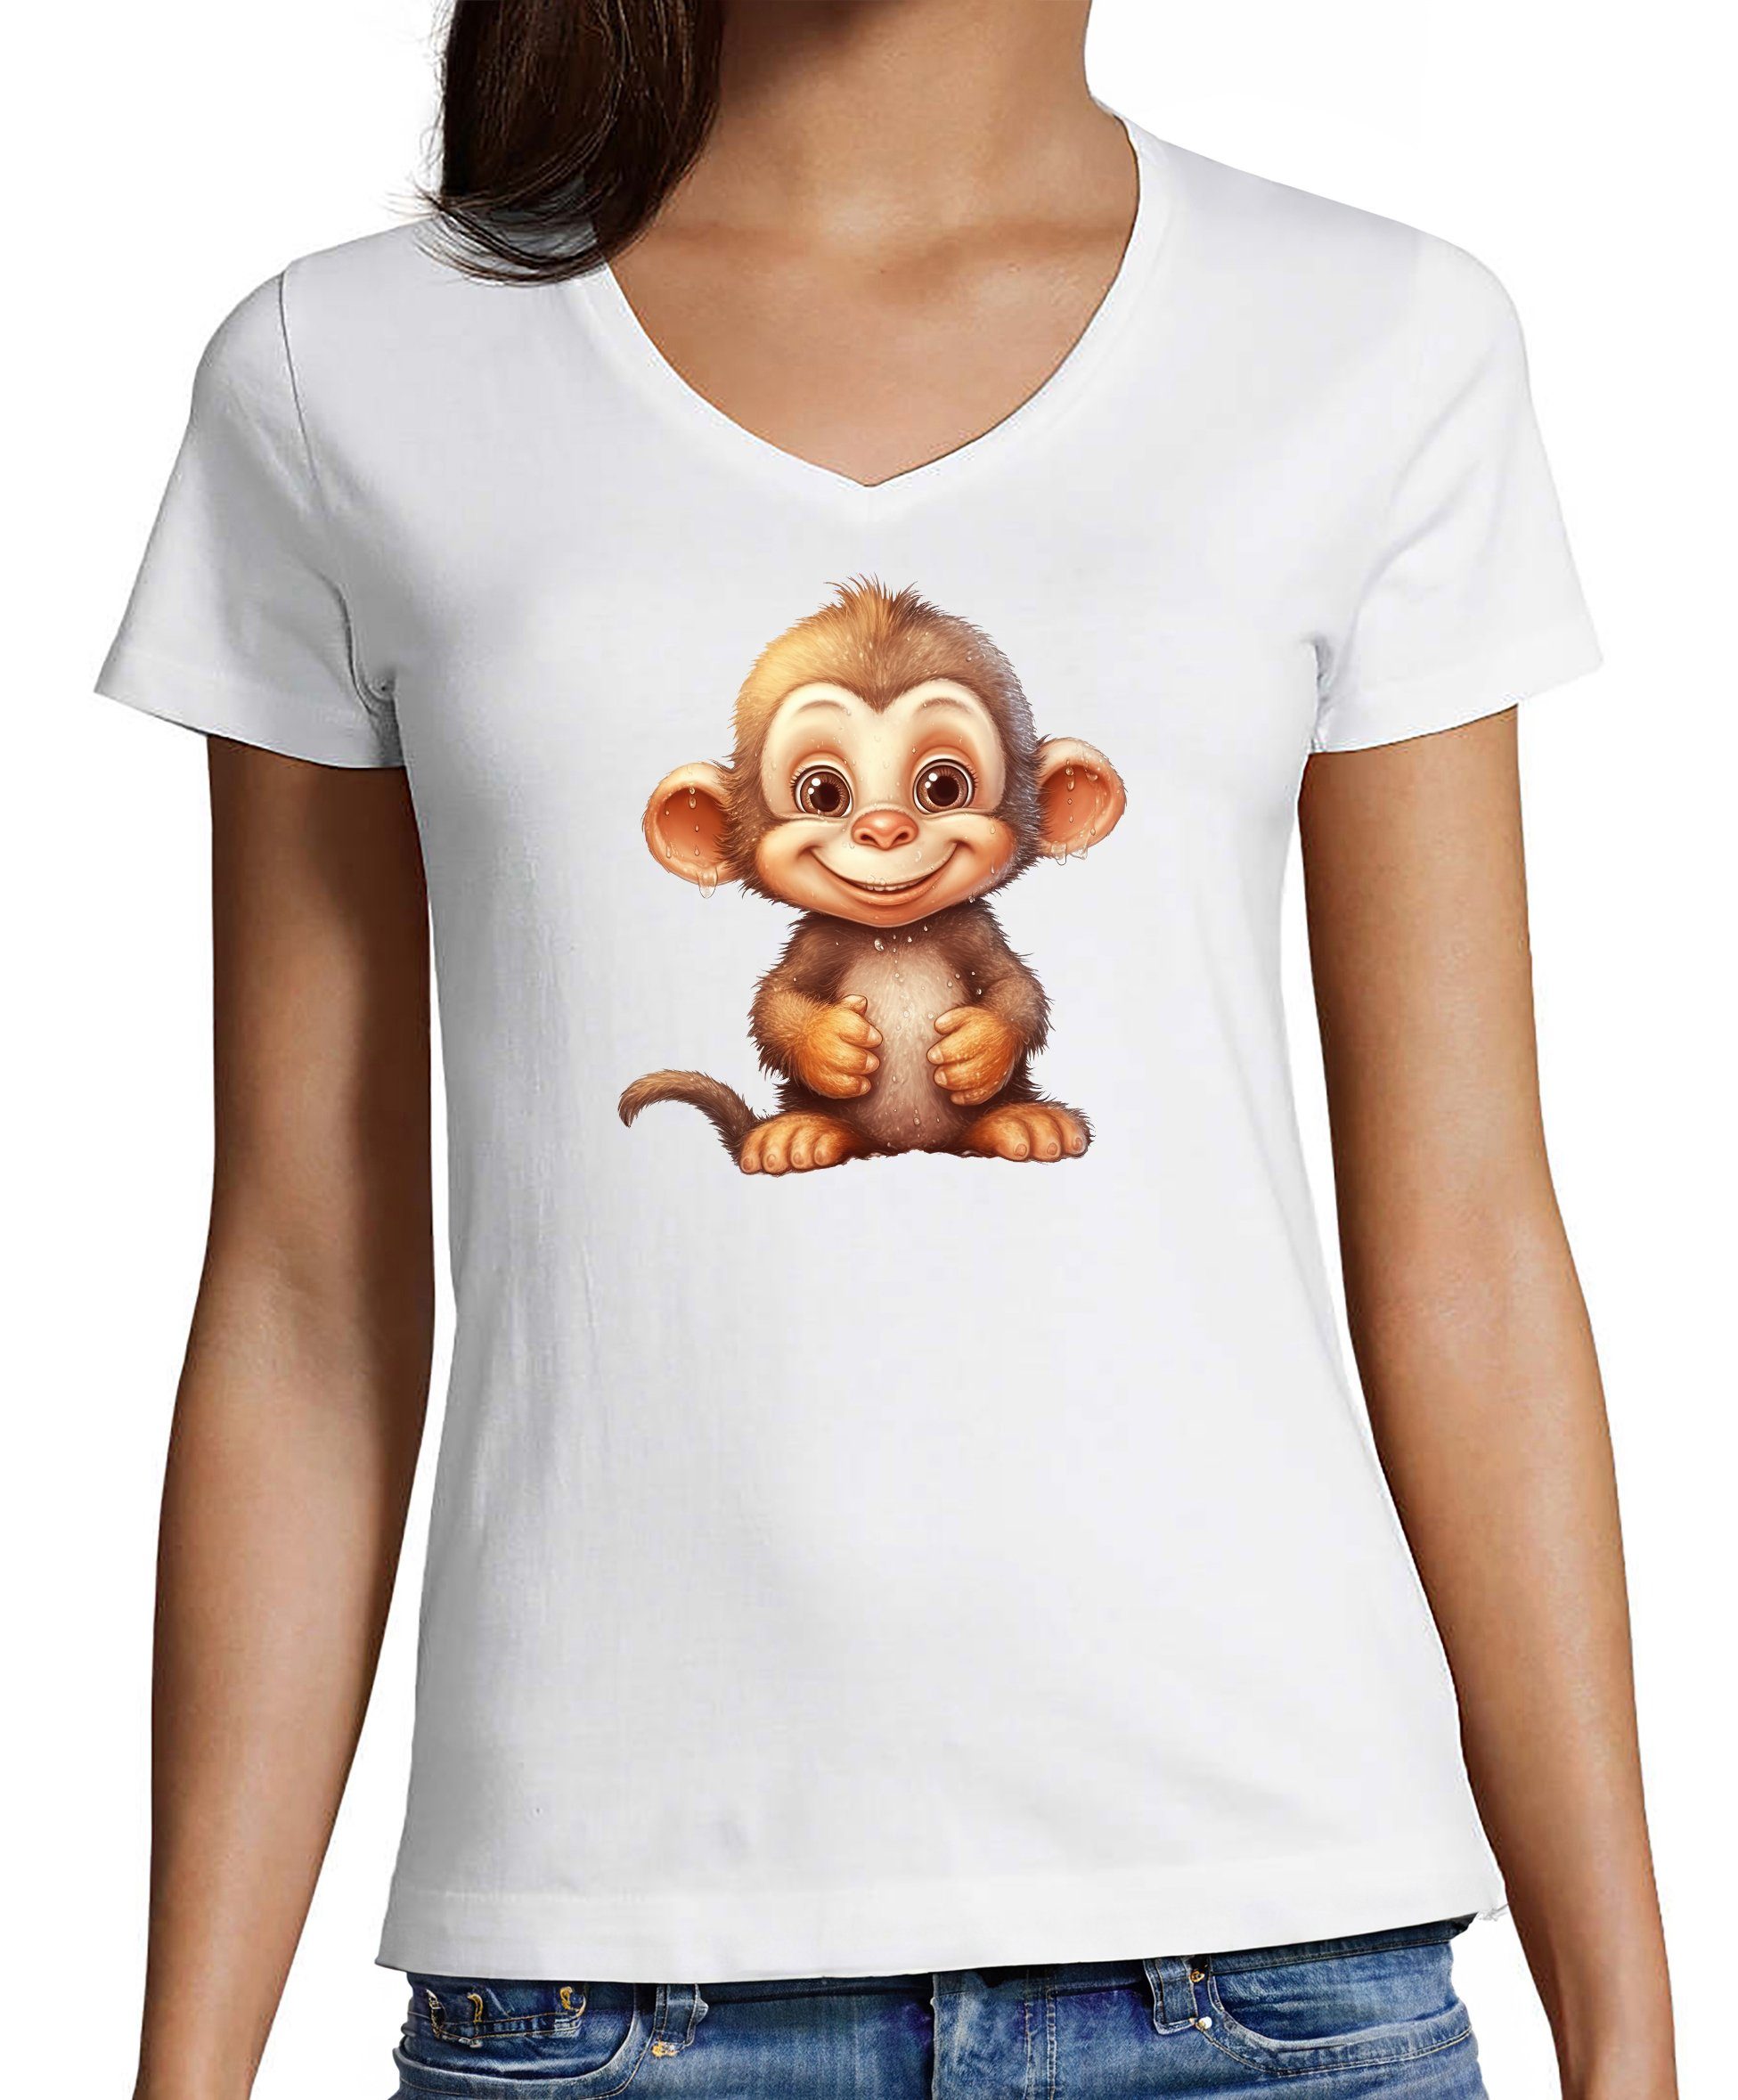 T-Shirt Affe - Fit Schimpanse MyDesign24 Aufdruck Damen Slim Shirt Baby Print mit V-Ausschnitt weiss Wildtier Baumwollshirt